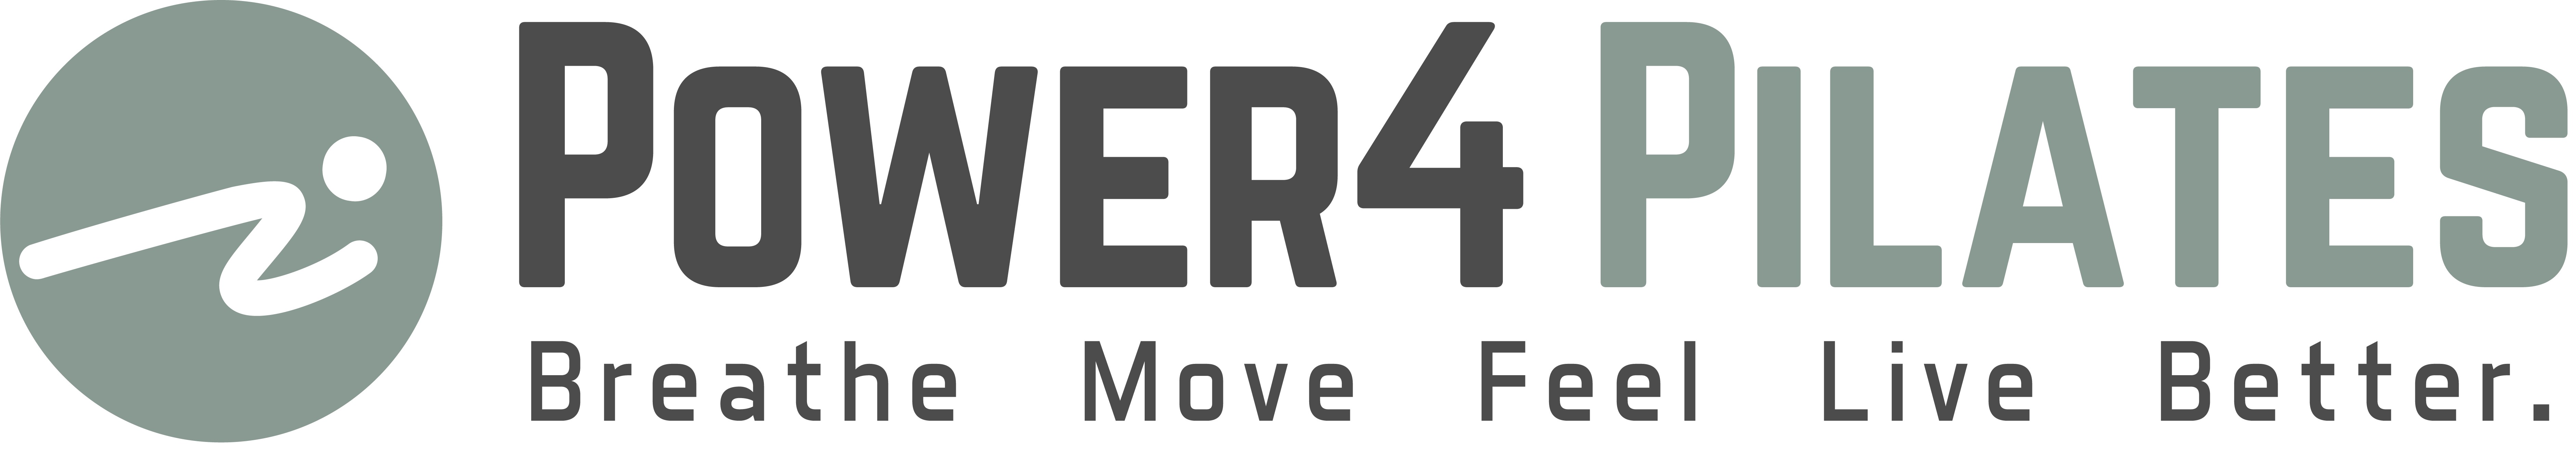 Join Reformer Pilates Classes, Multiple Levels & Formats - Power4 Pilates